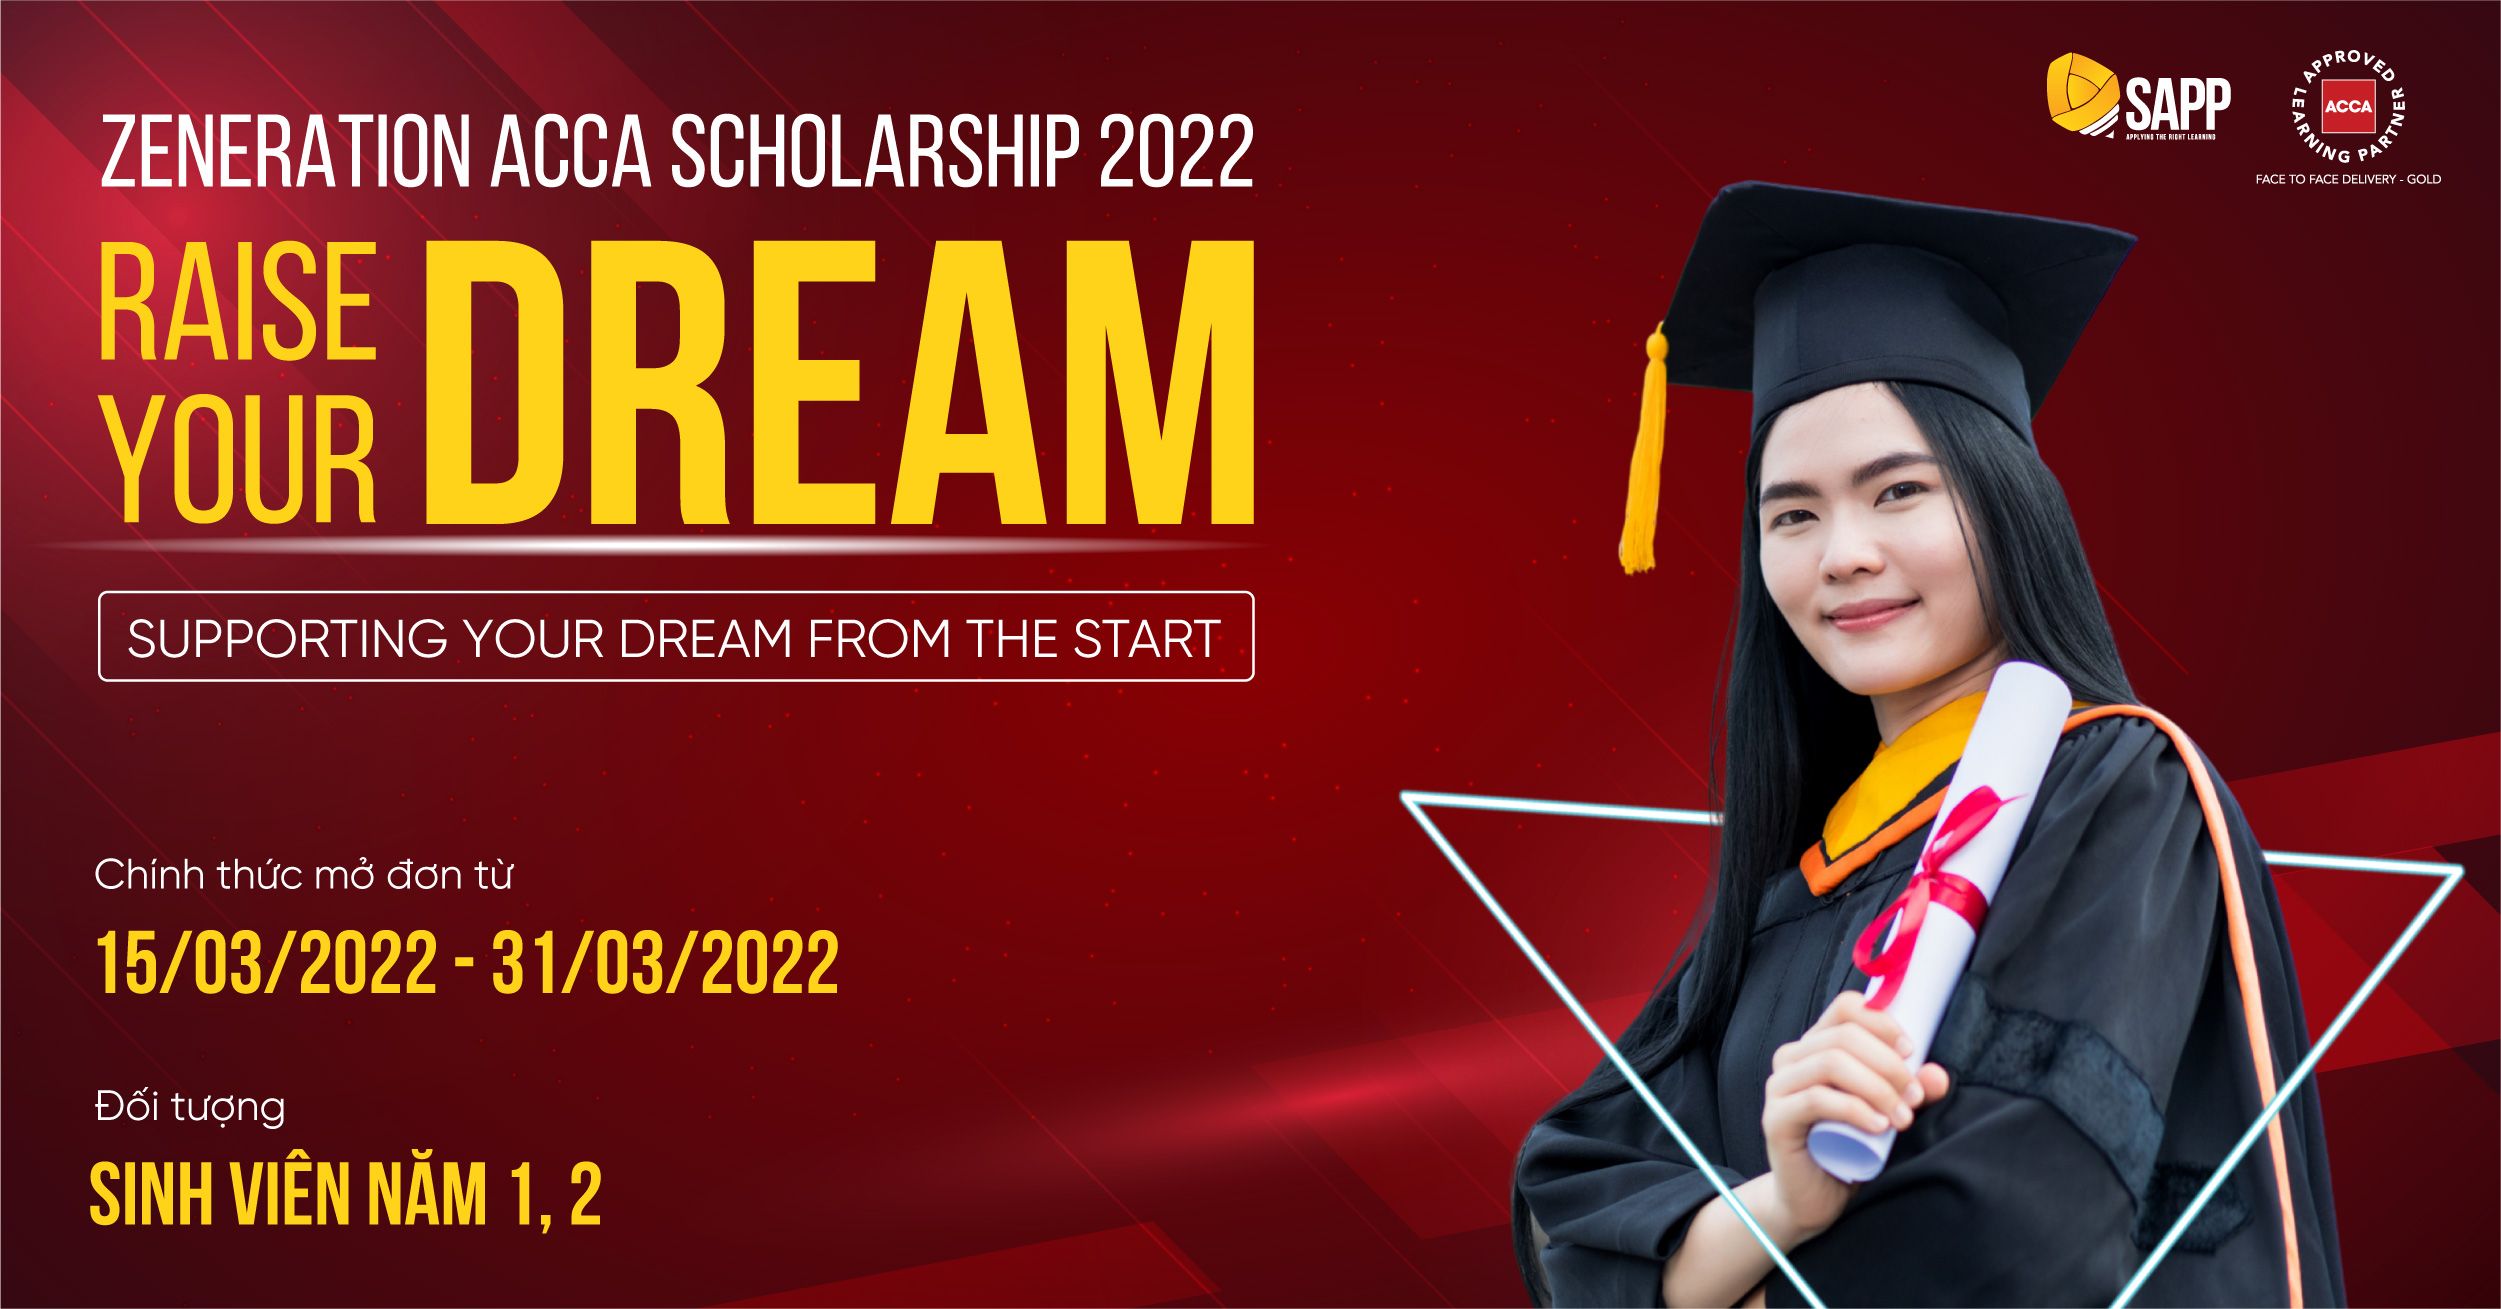 ACCA Scholarship 2022 - Raise Your Dream